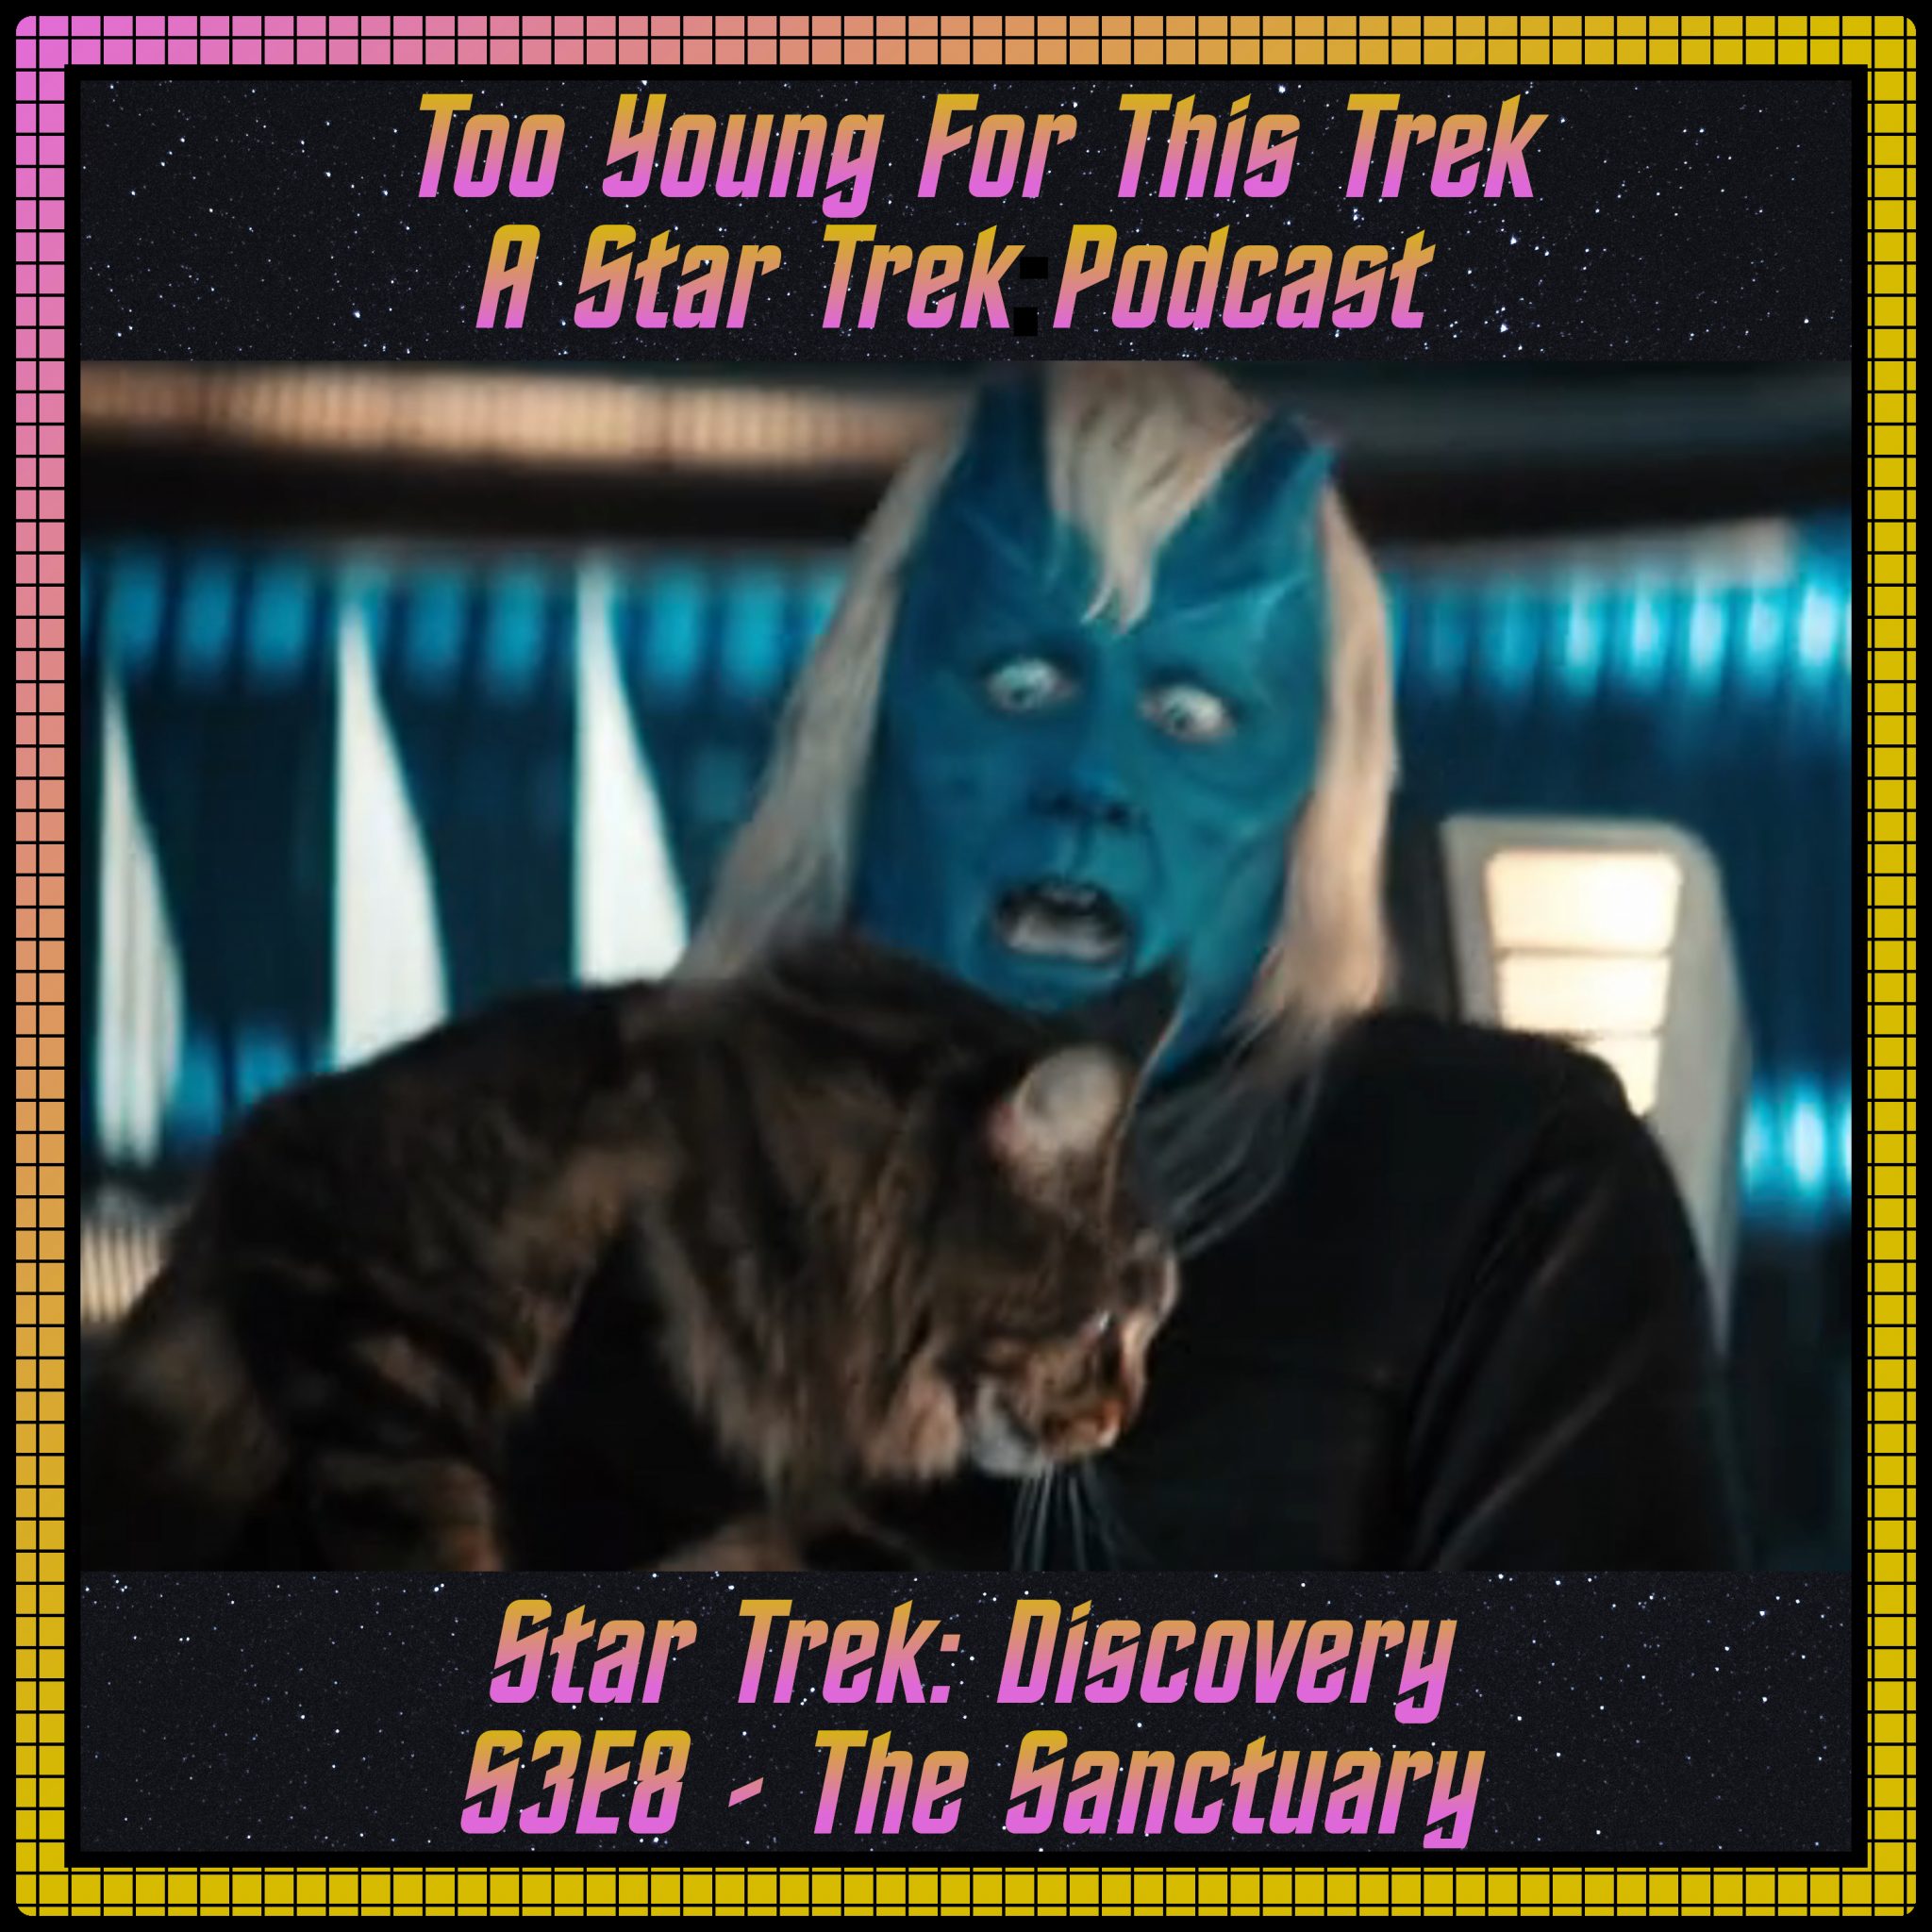 Star Trek: Discovery S3E8 - The Sanctuary